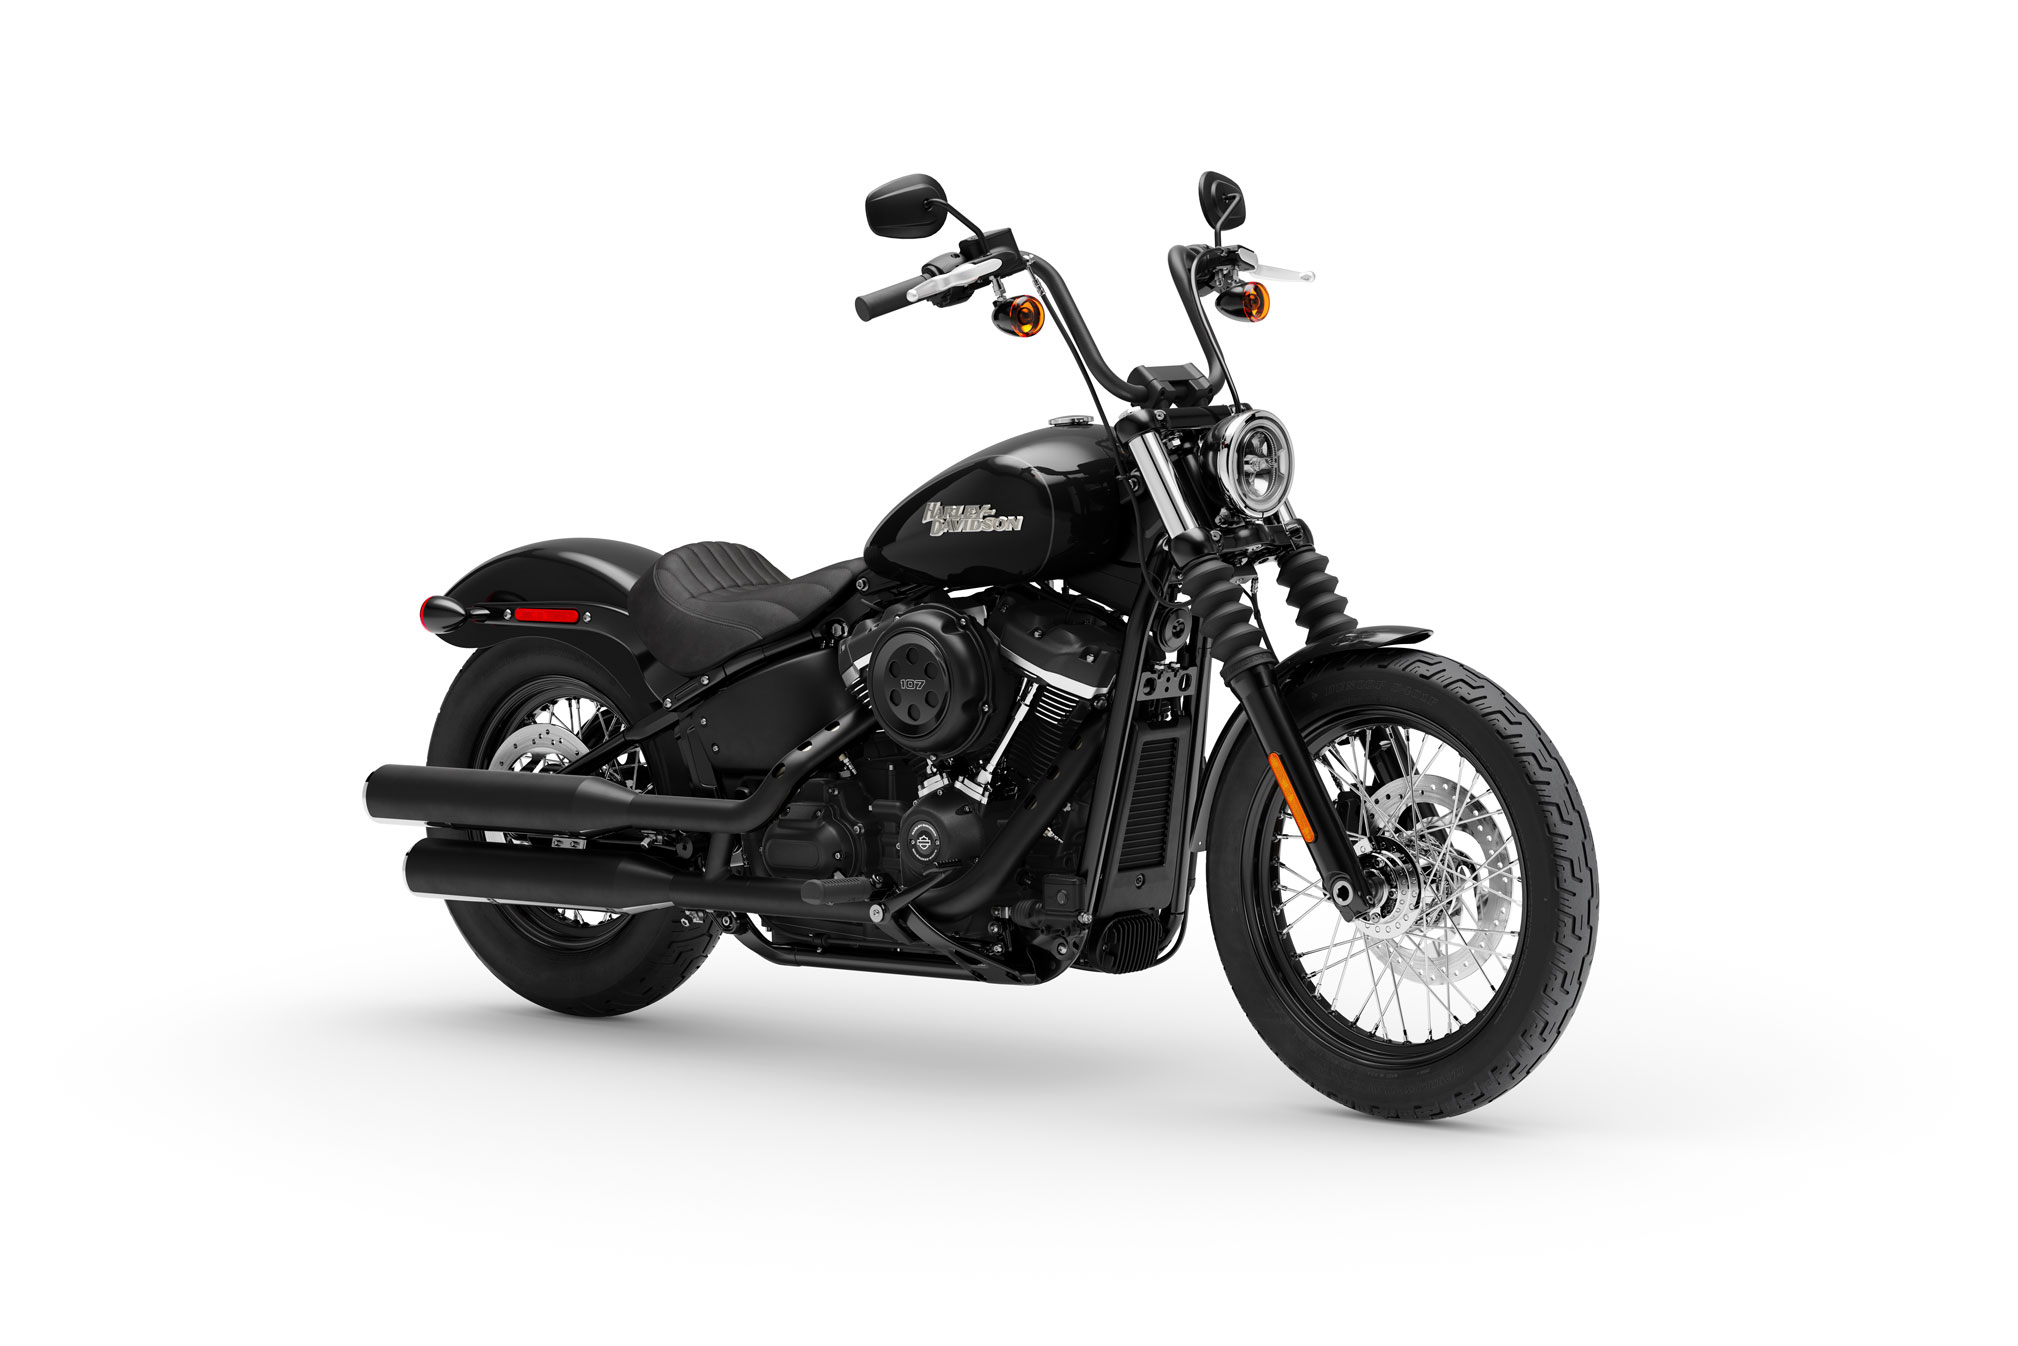 2019 Harley Davidson Street Bob Guide Total Motorcycle